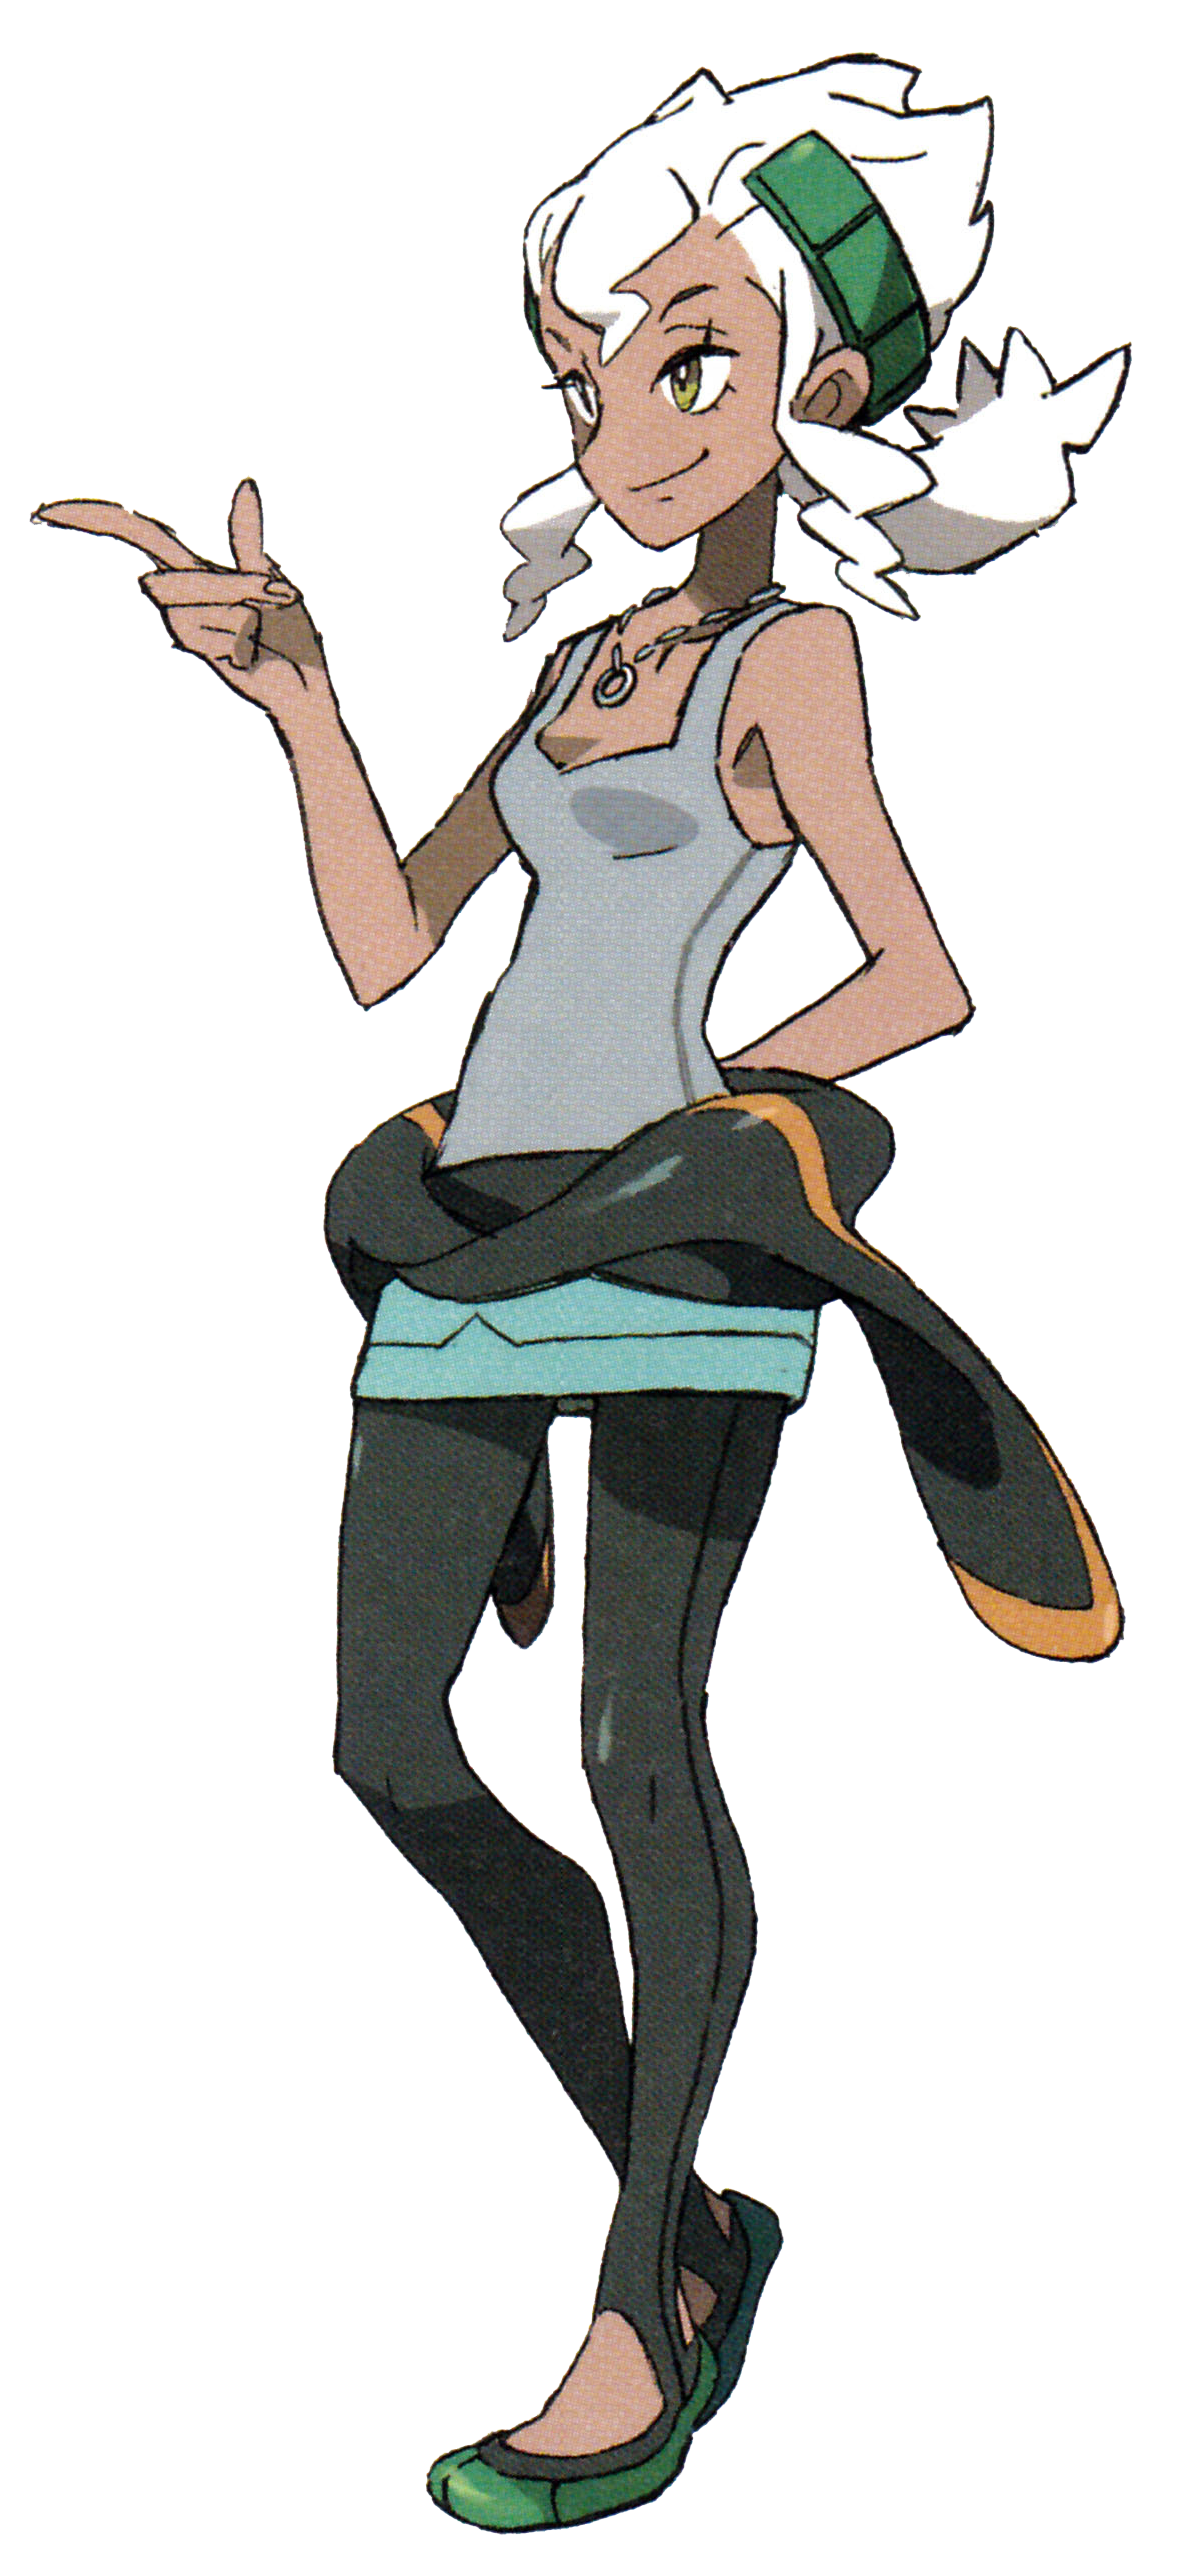 Anna (Alola) - Bulbapedia, the community-driven Pokémon encyclopedia